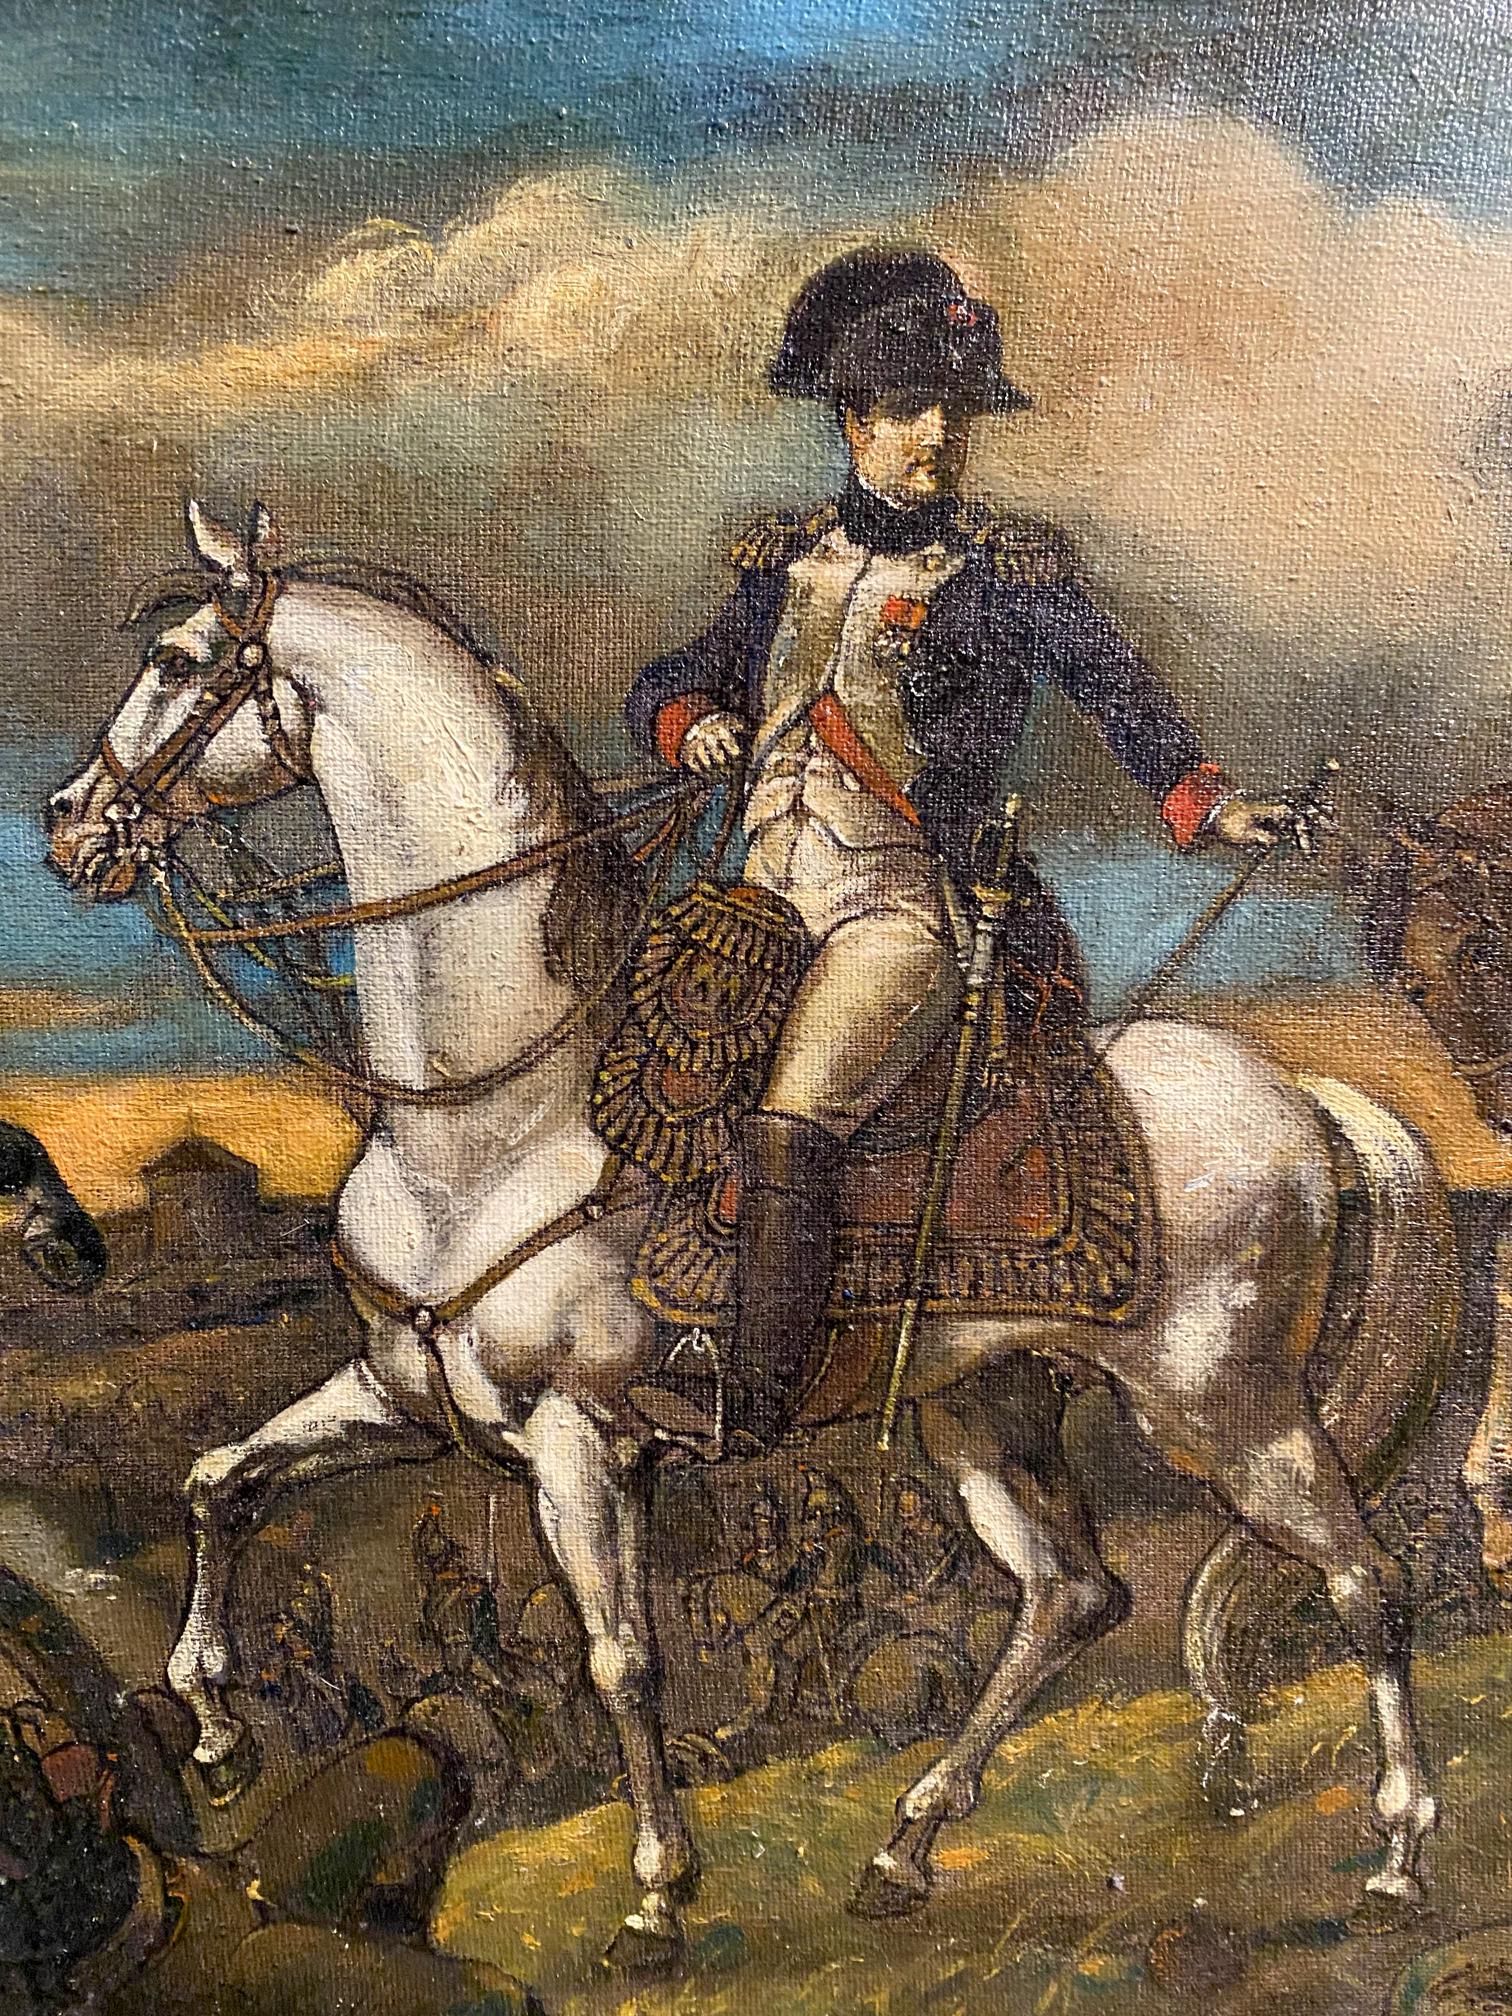 Oleg Litvinov's oil painting showcases Napoleon's leadership amidst his army